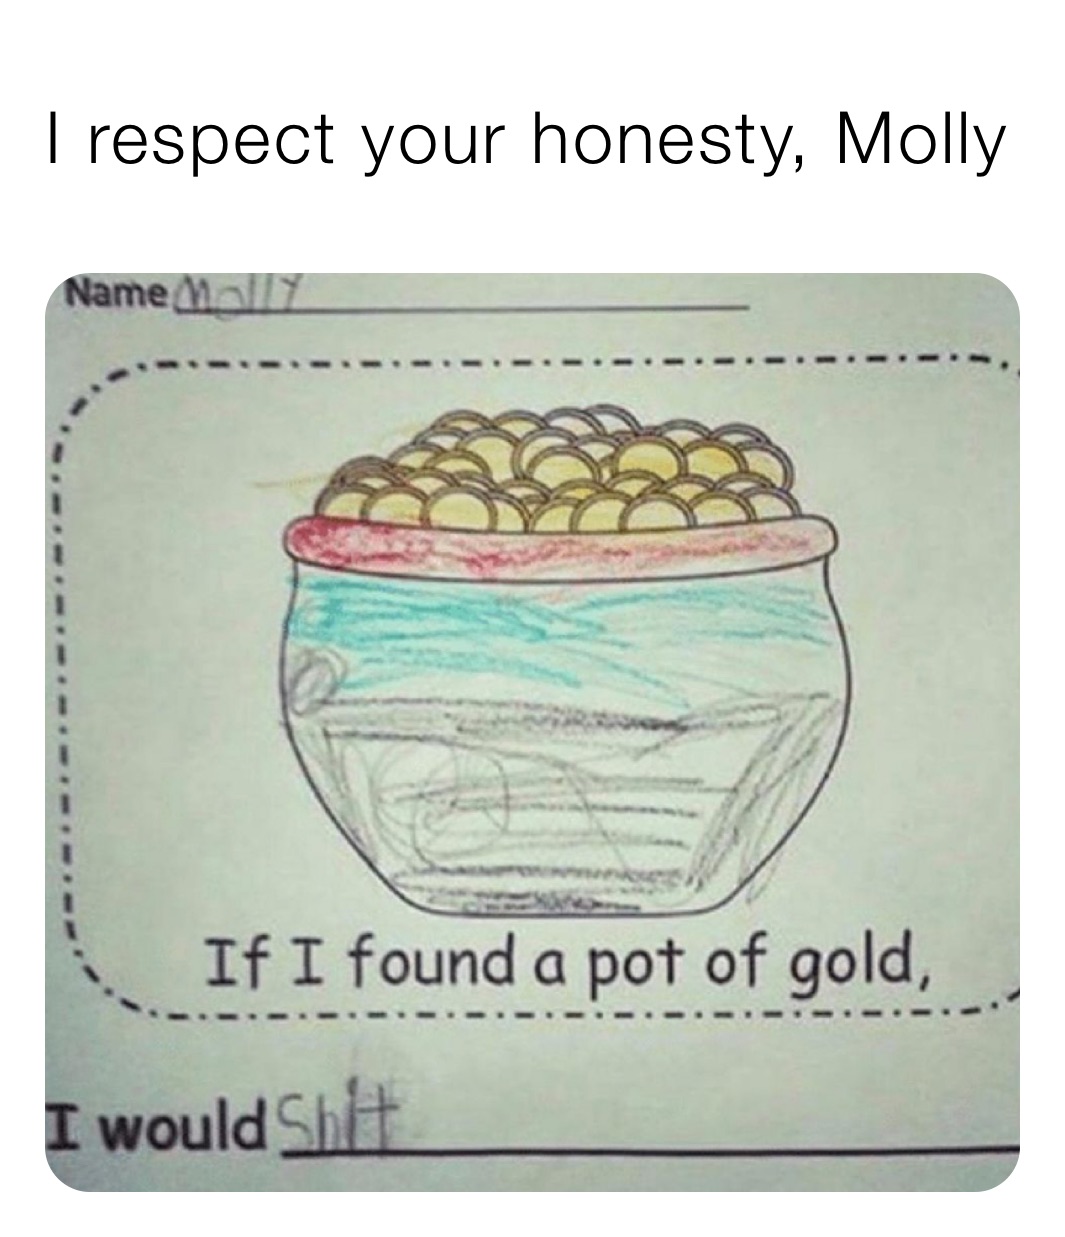 I respect your honesty, Molly